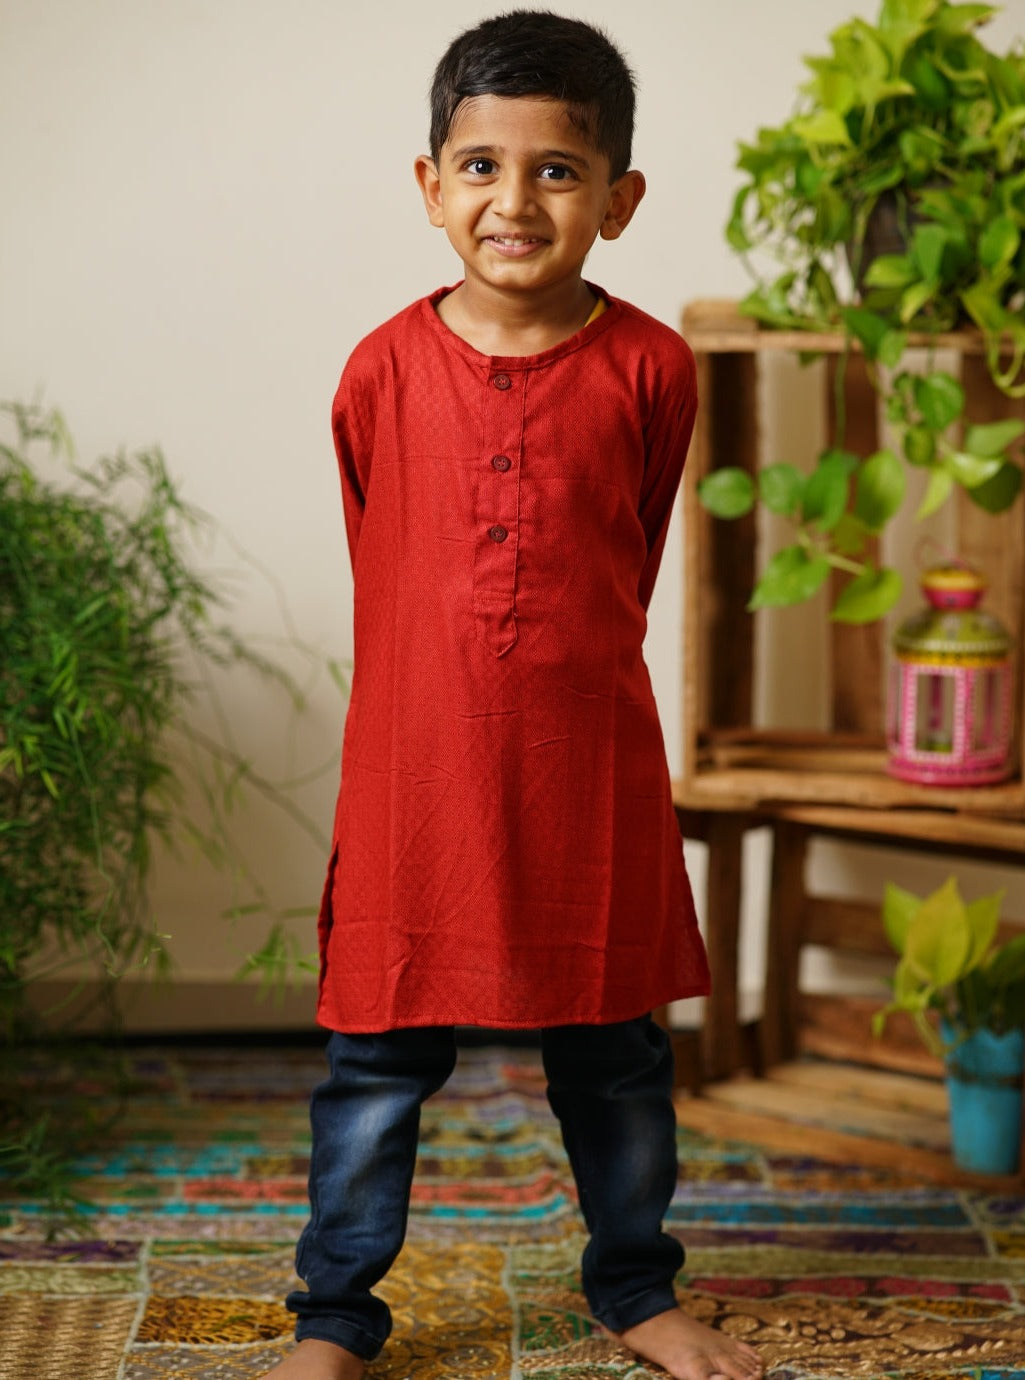 Tomato red  traditional ethnic brocade printed silk cotton kurta pyjama salwar suit pajama churidar set sherwani jacket for baby boy kids 